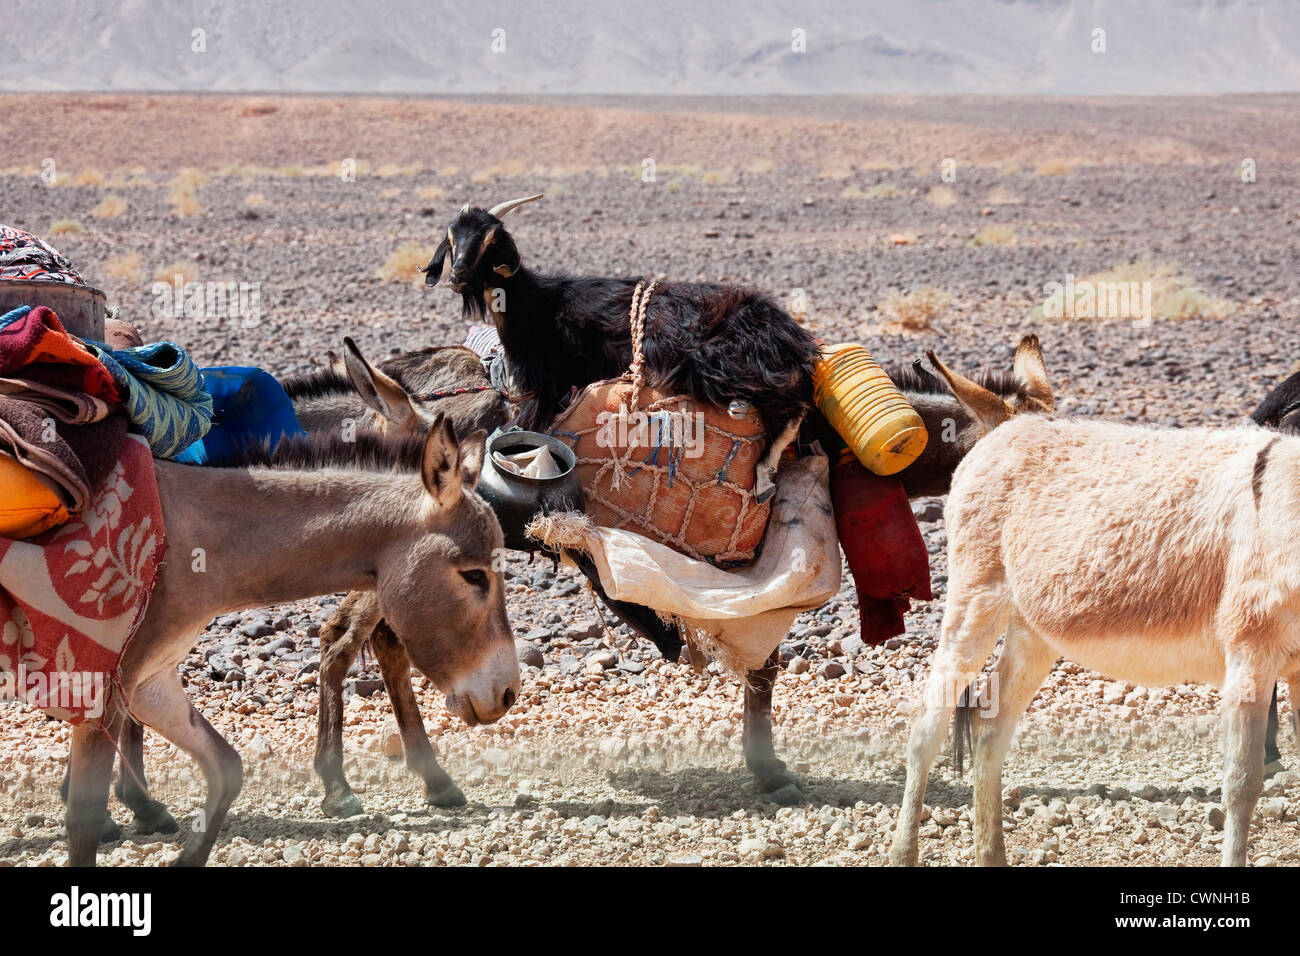 Donkeys of nomads carrying goods and a goat through stony desert, Sahara desert, Morocco. Stock Photo